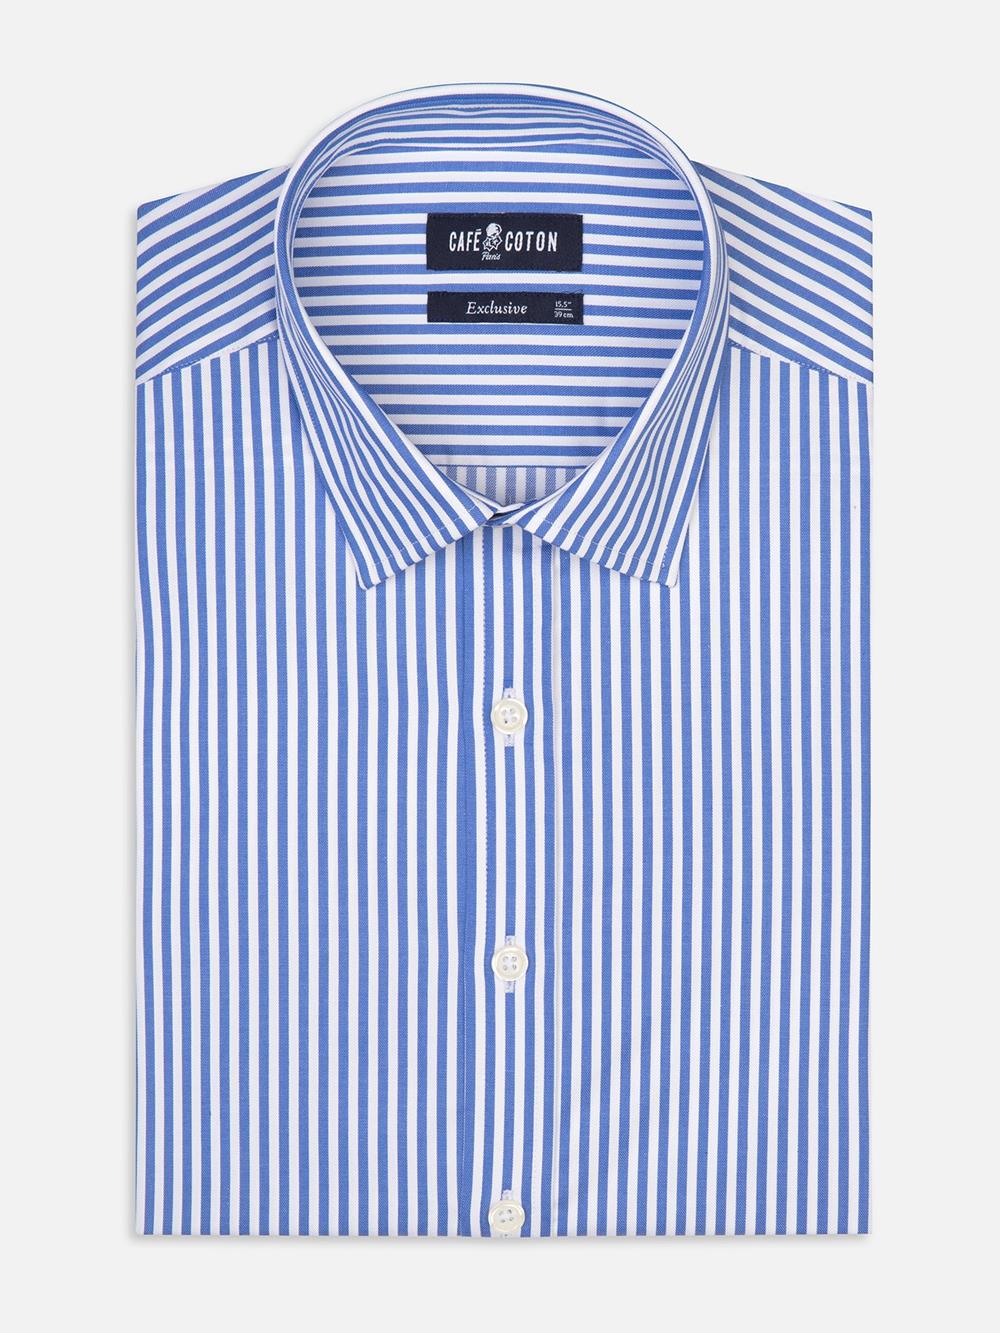 Nick blue striped slim fit shirt - Small collar